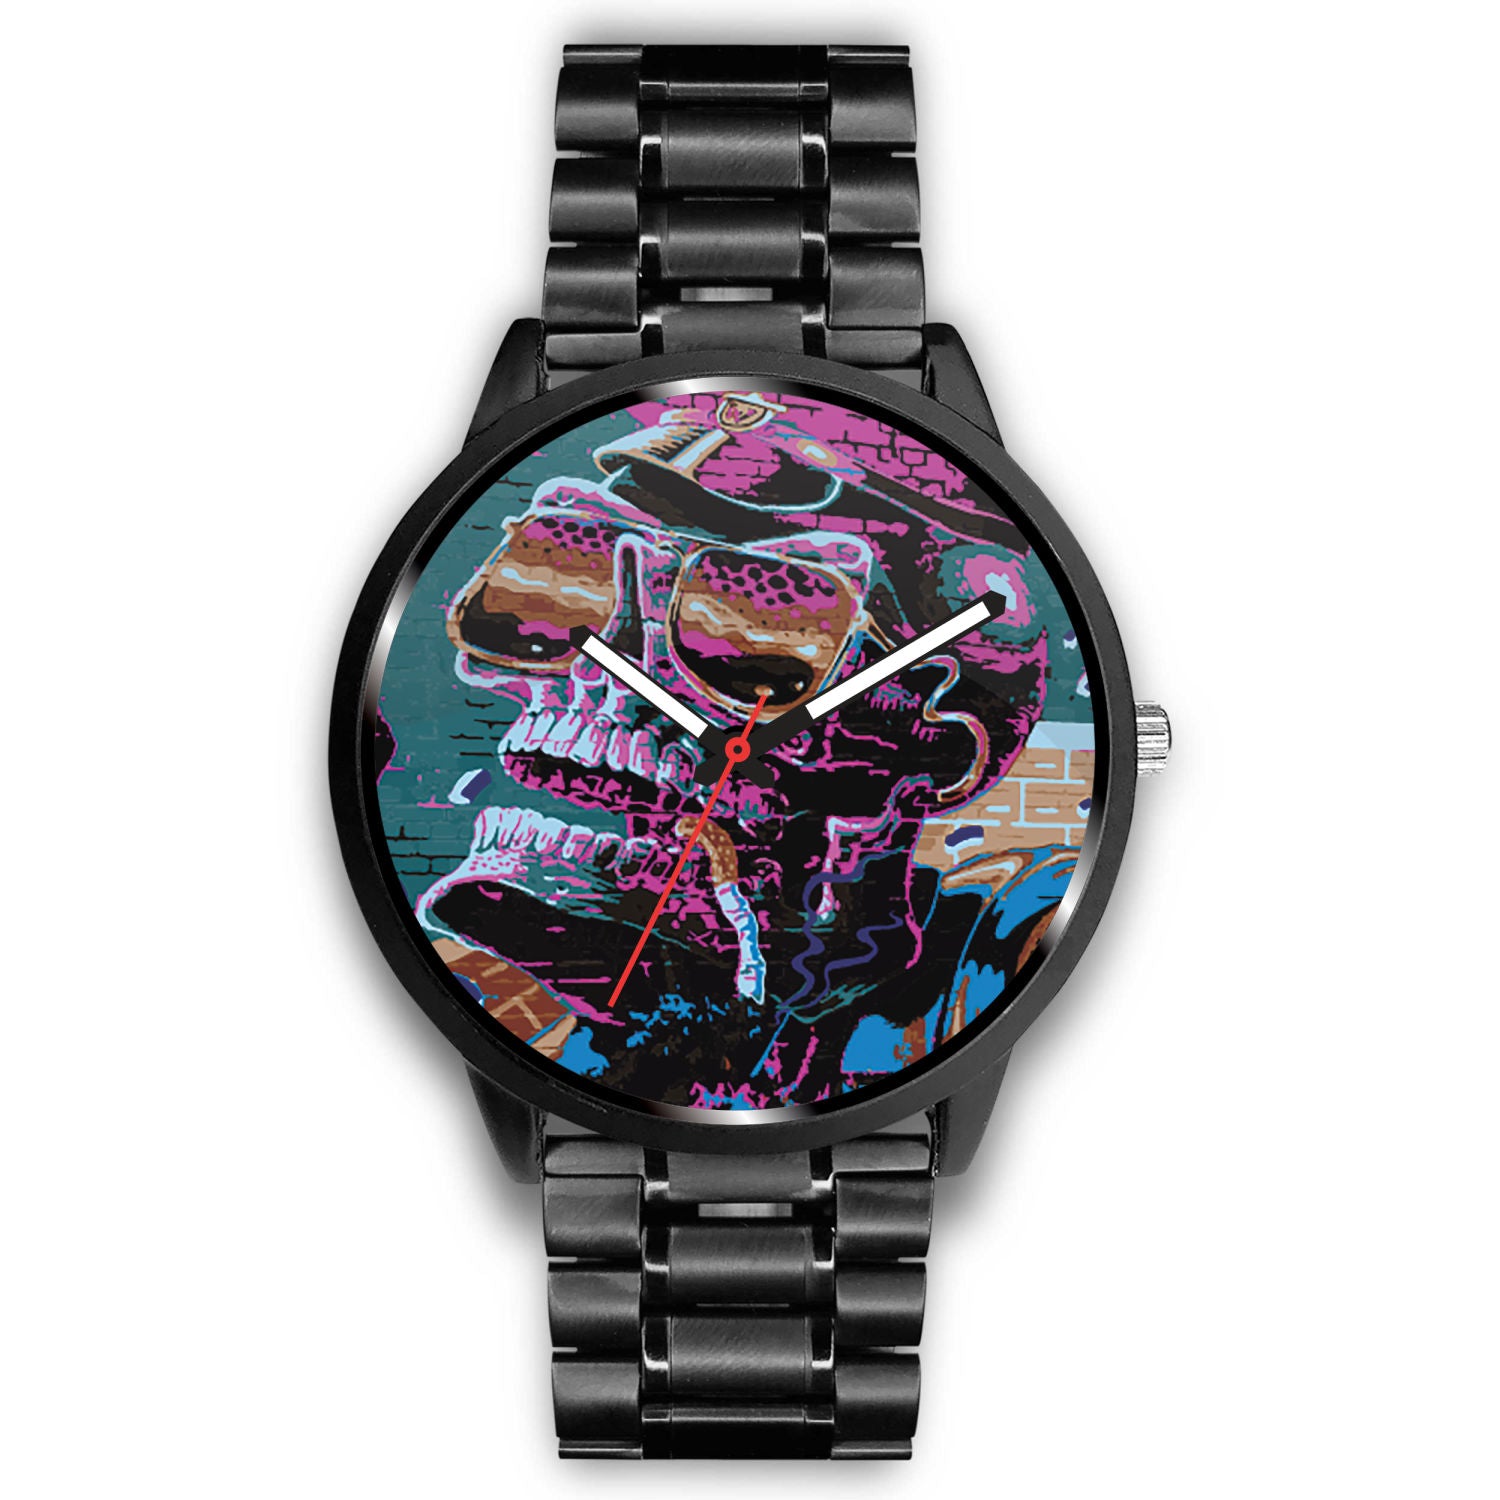 The graffiti skull watch